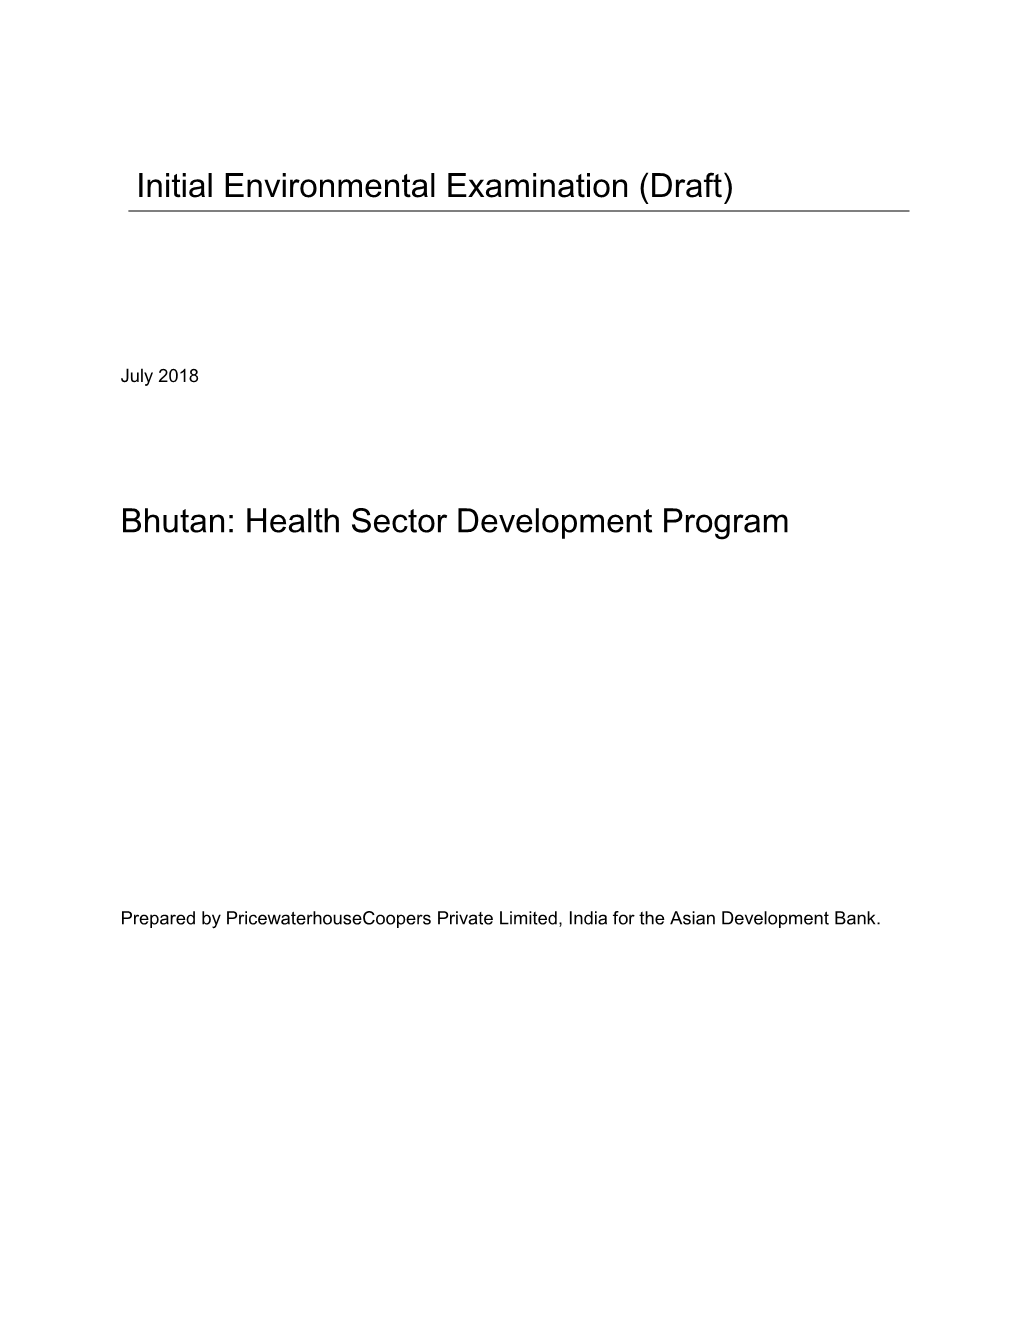 Initial Environmental Examination (Draft) Bhutan: Health Sector